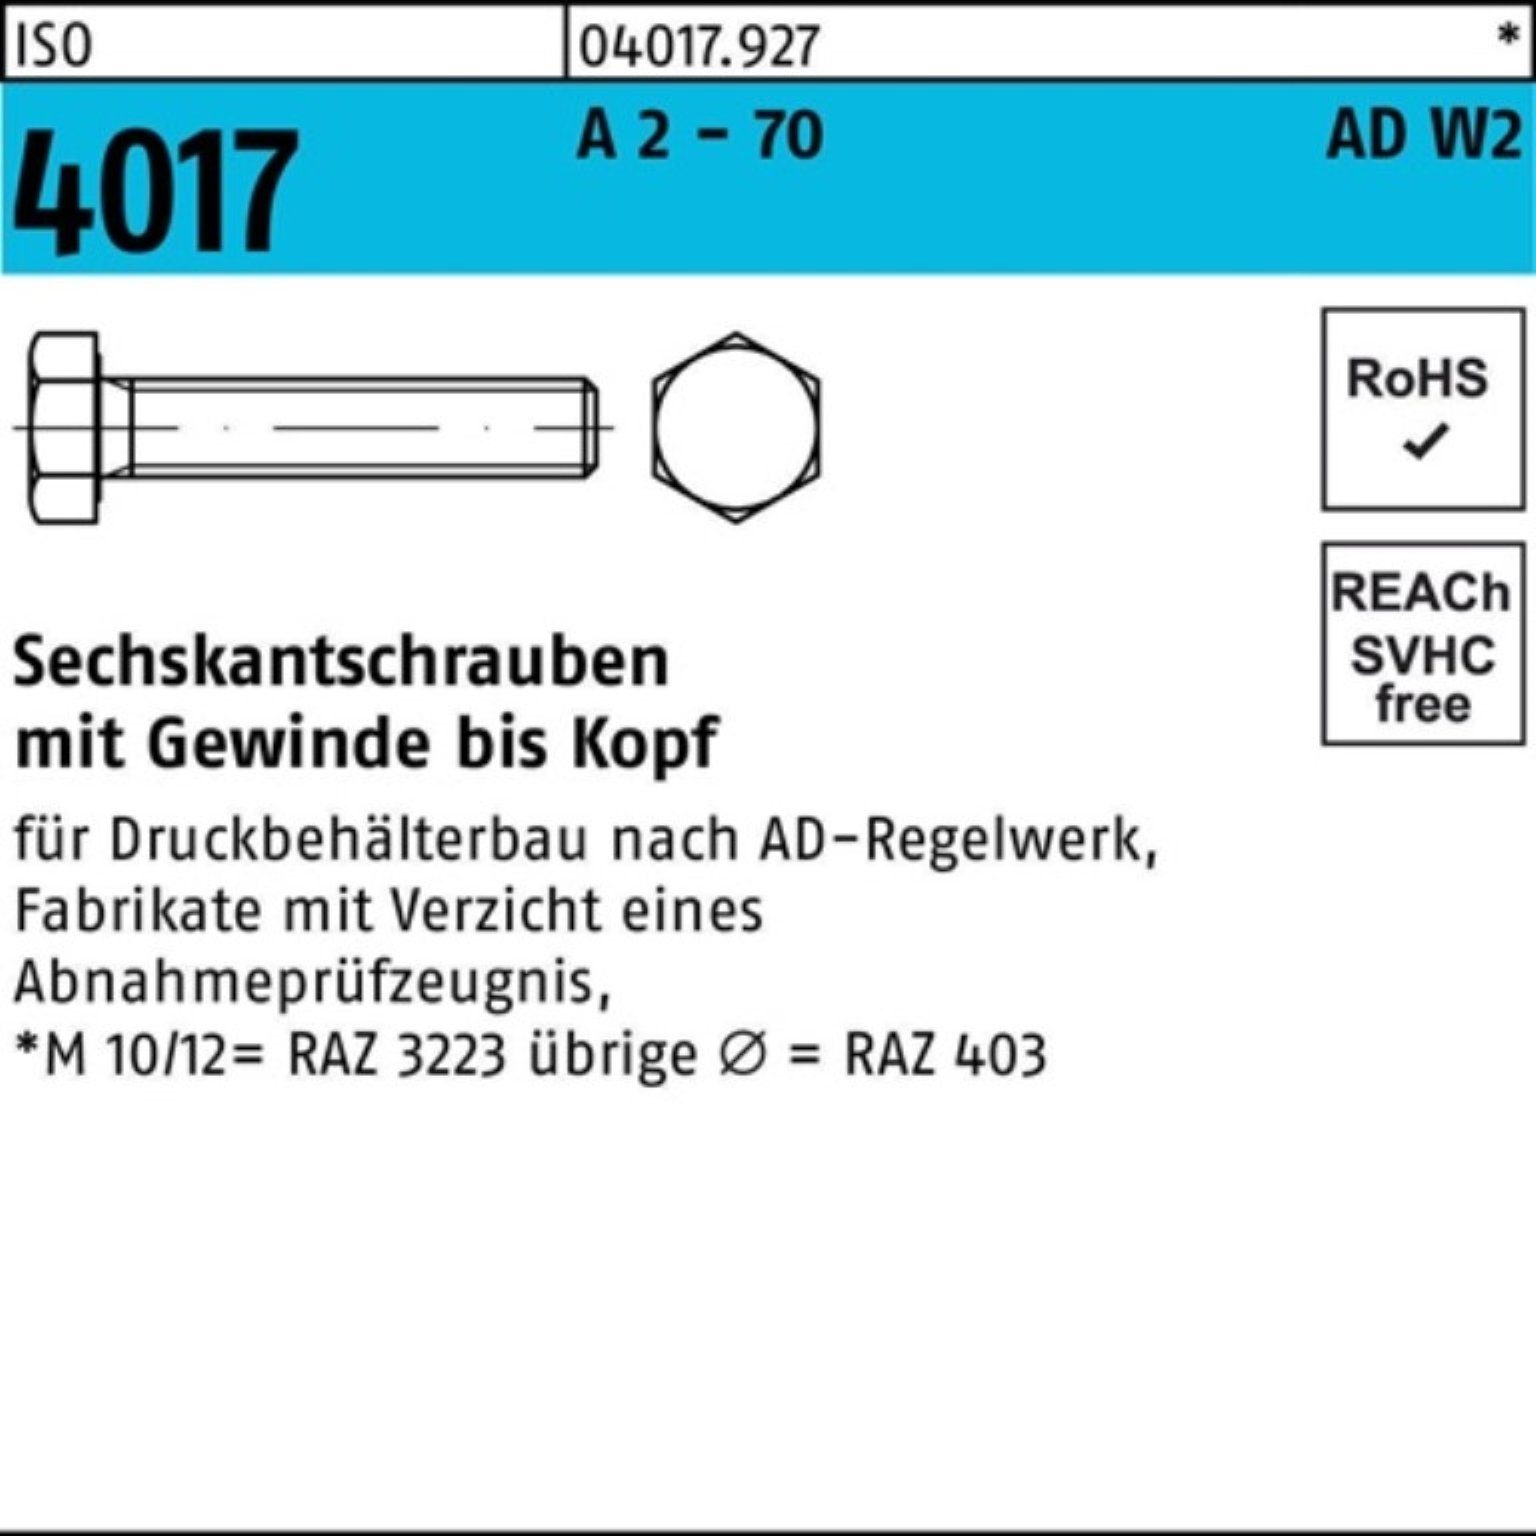 Bufab Sechskantschraube 100er Pack Sechskantschraube ISO 4017 VG M12x 45 A 2 - 70 AD-W2 50 St